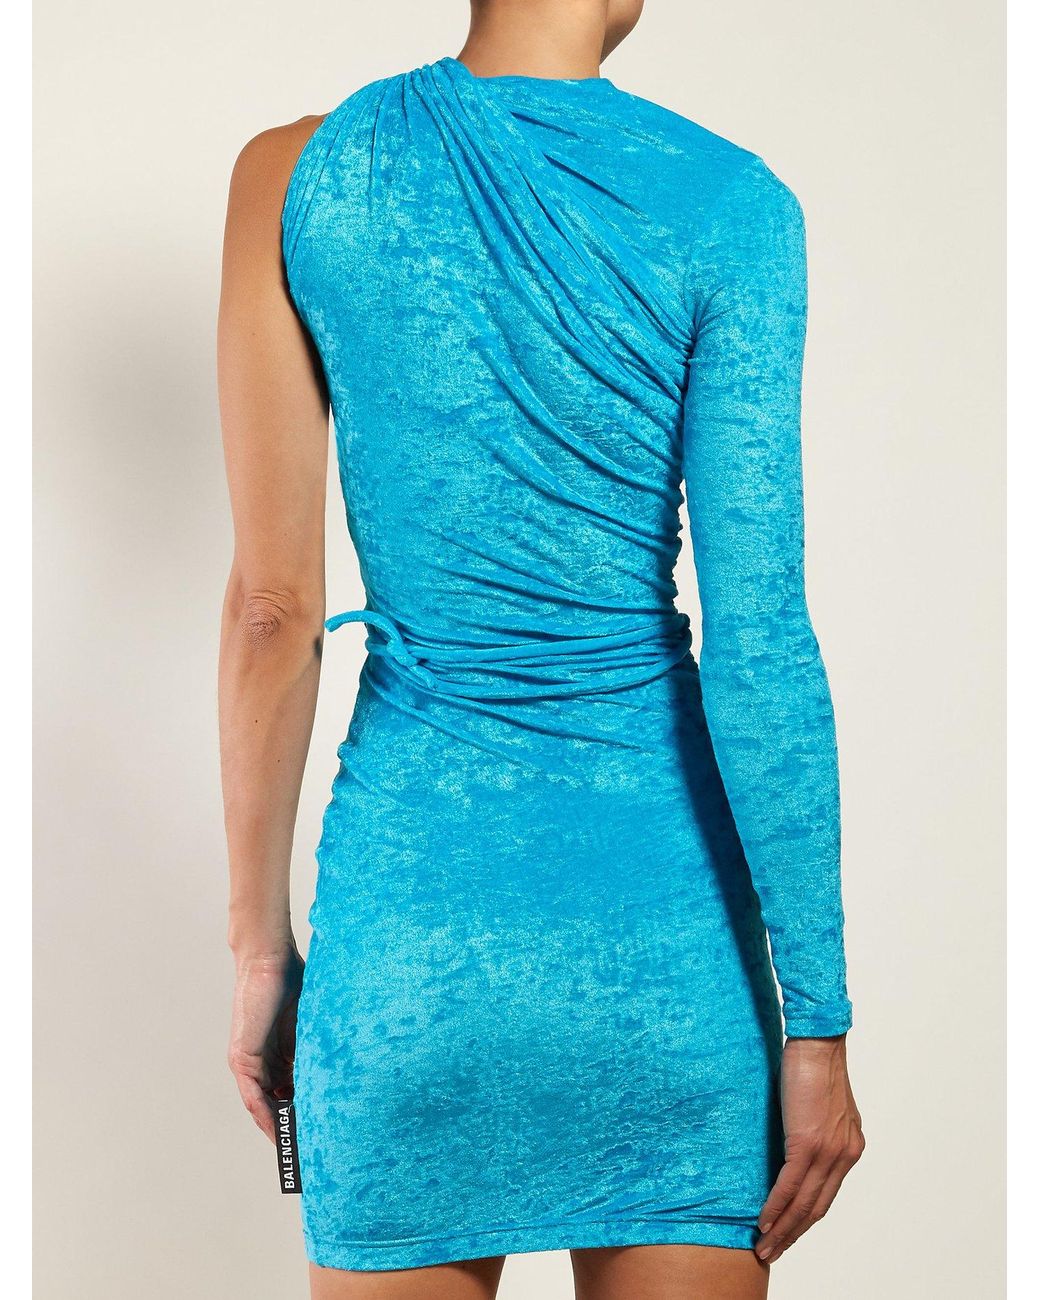 Balenciaga Asymmetric Crushed Velvet Mini Dress in Blue | Lyst